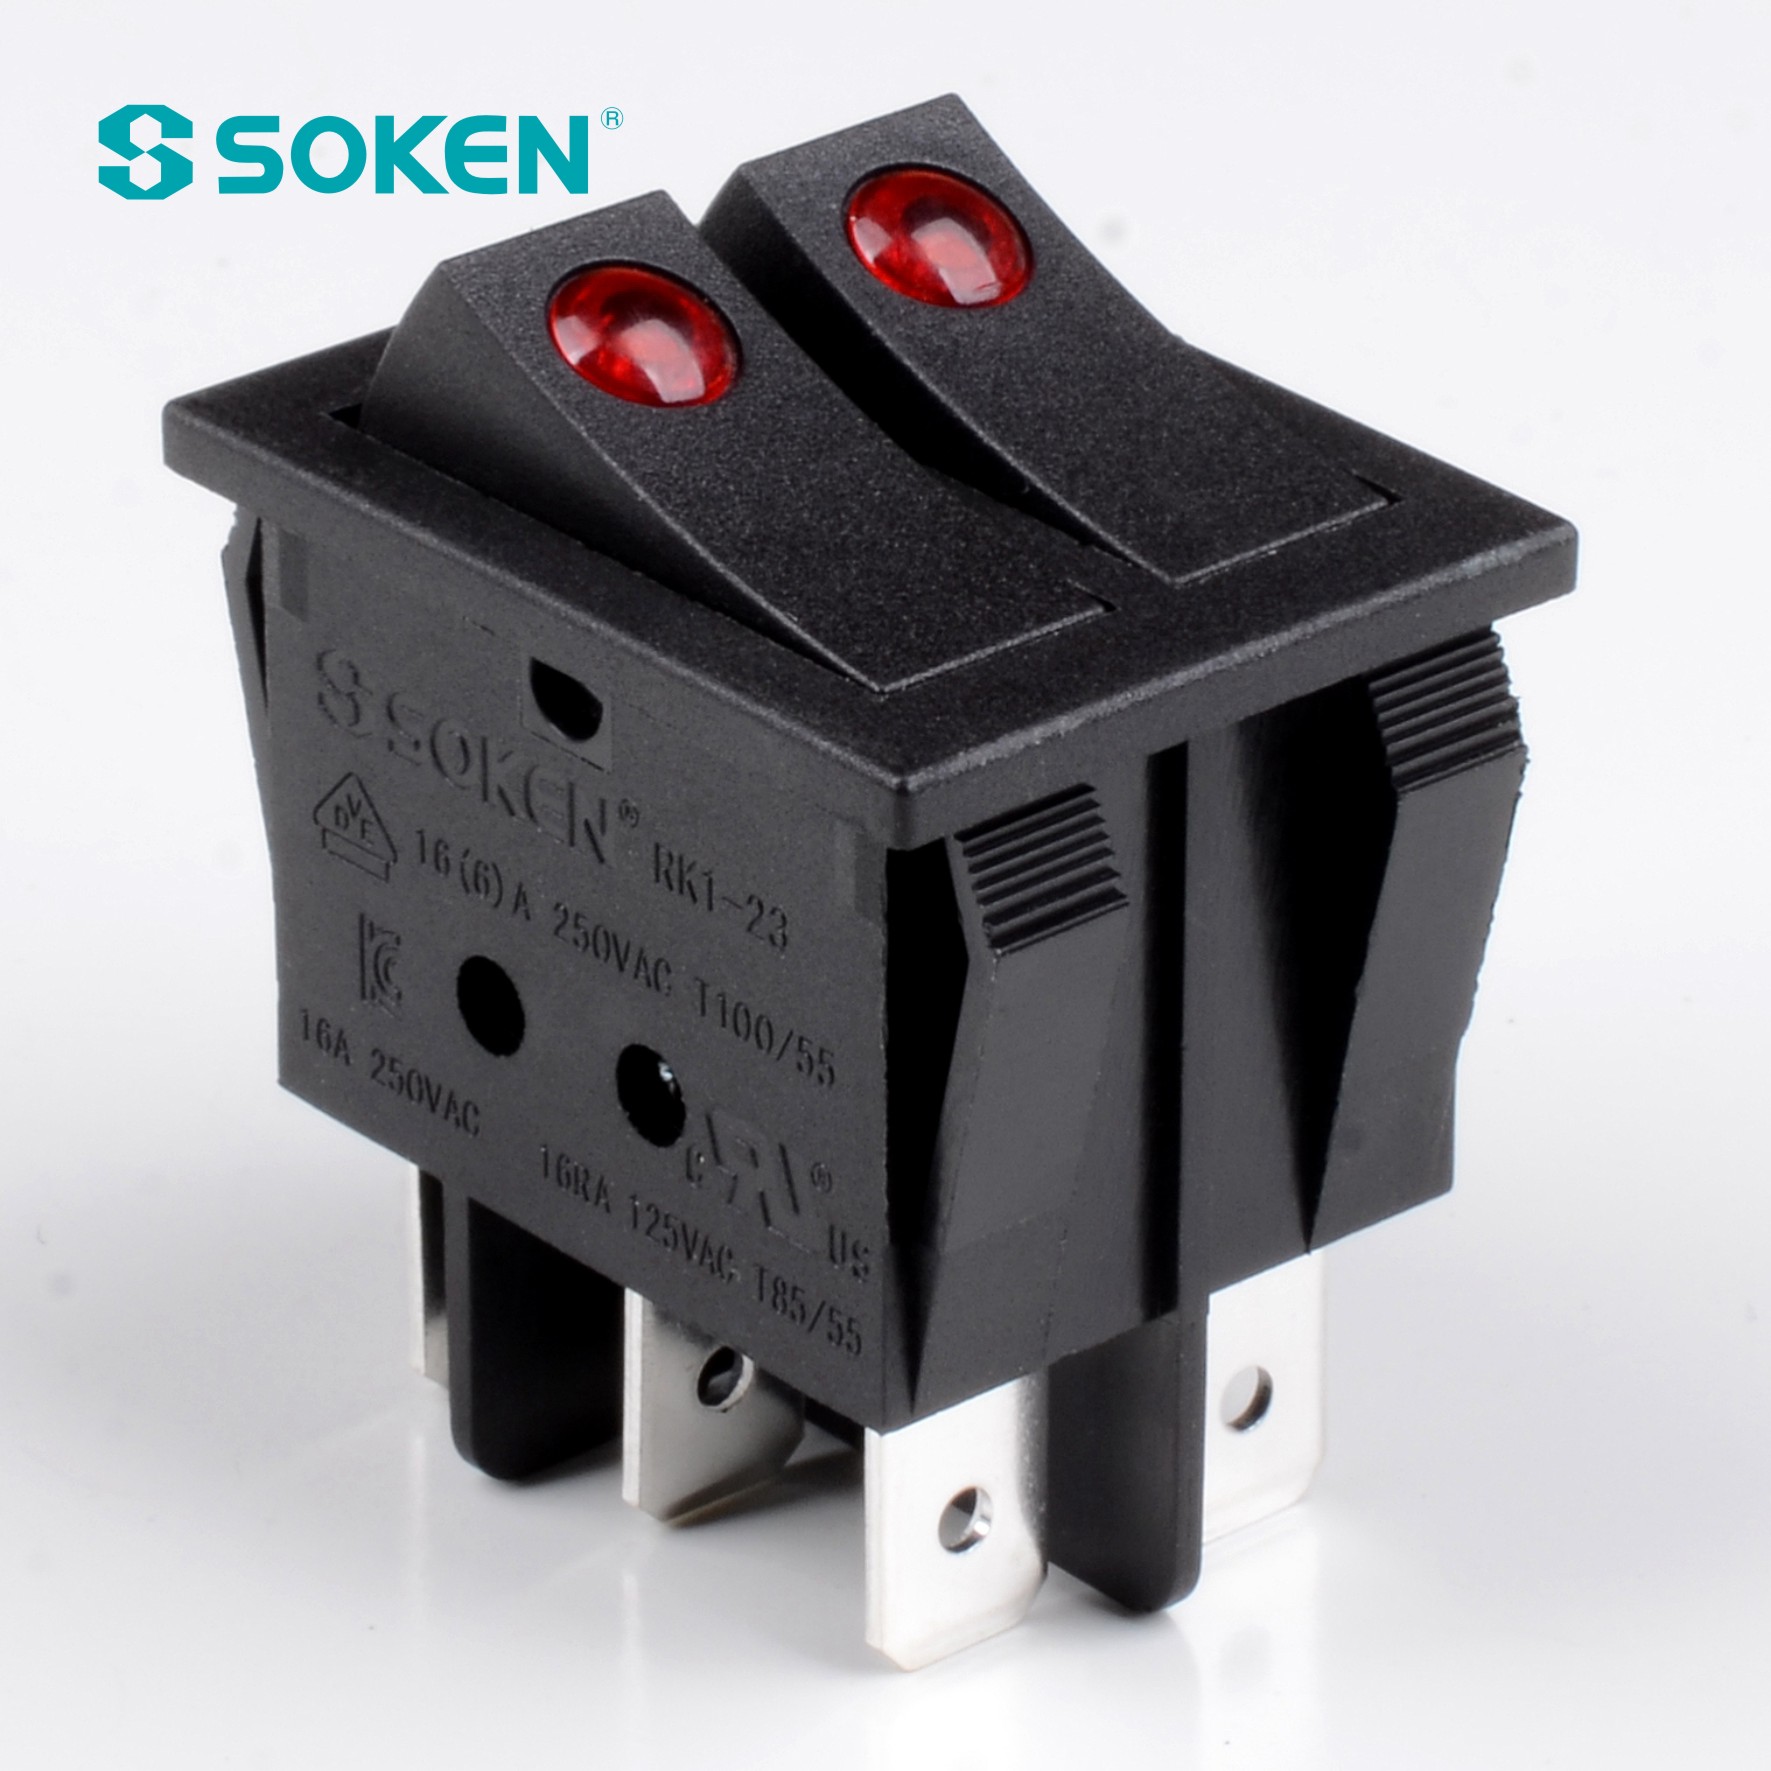 Soken Switches CQC T100/55 Rocker Switch Kema Keur Switch